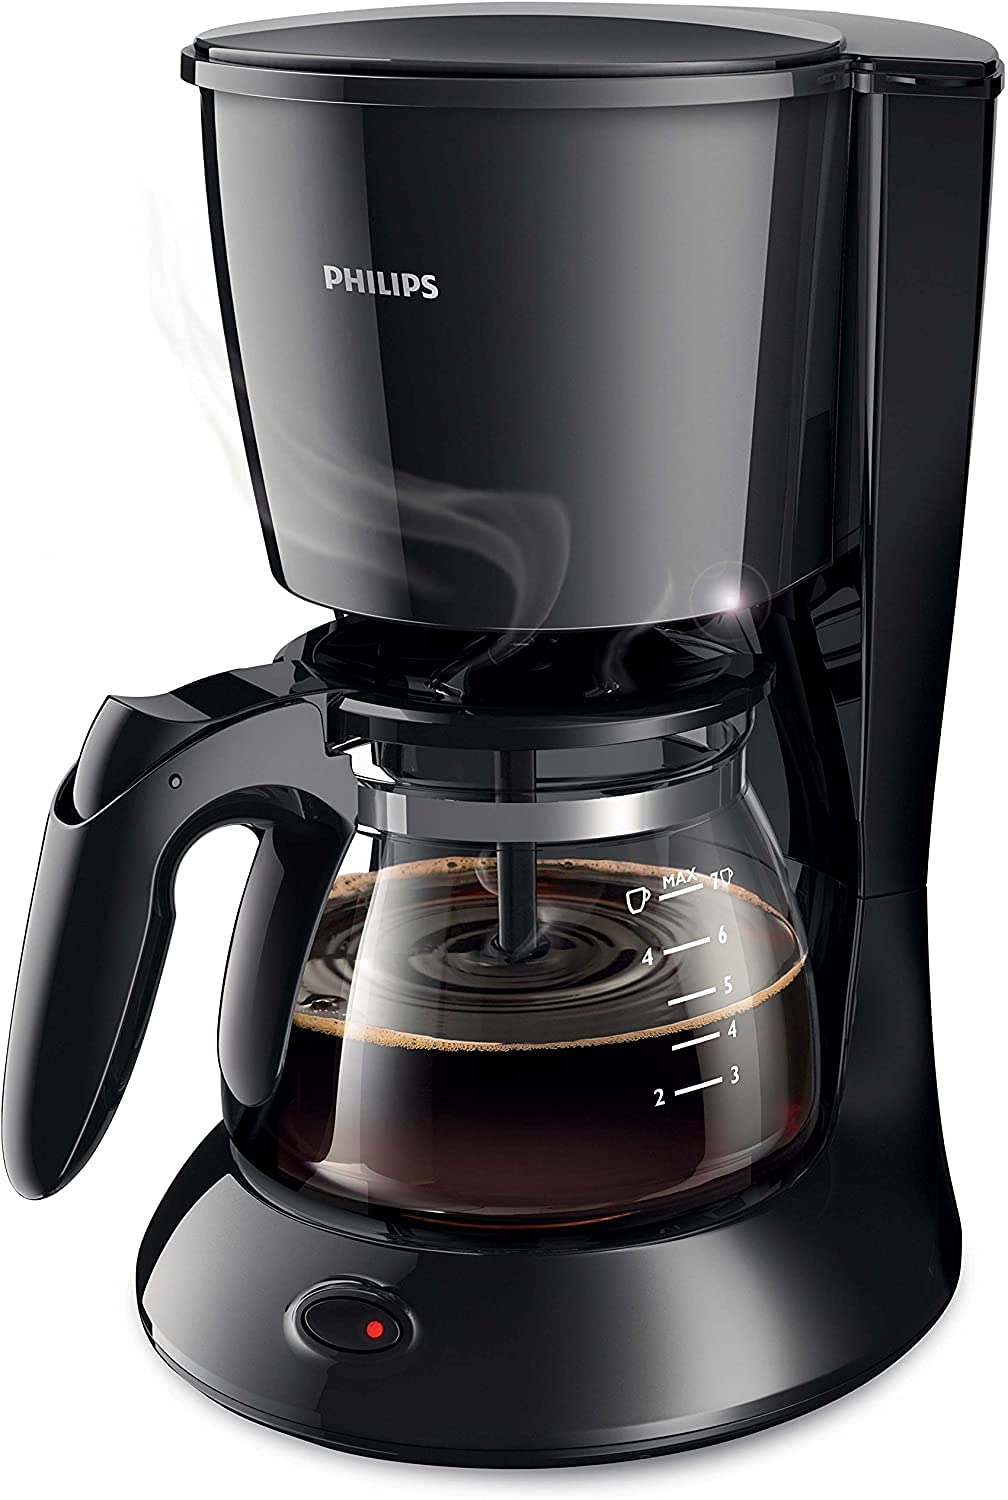 Philips coffee maker black